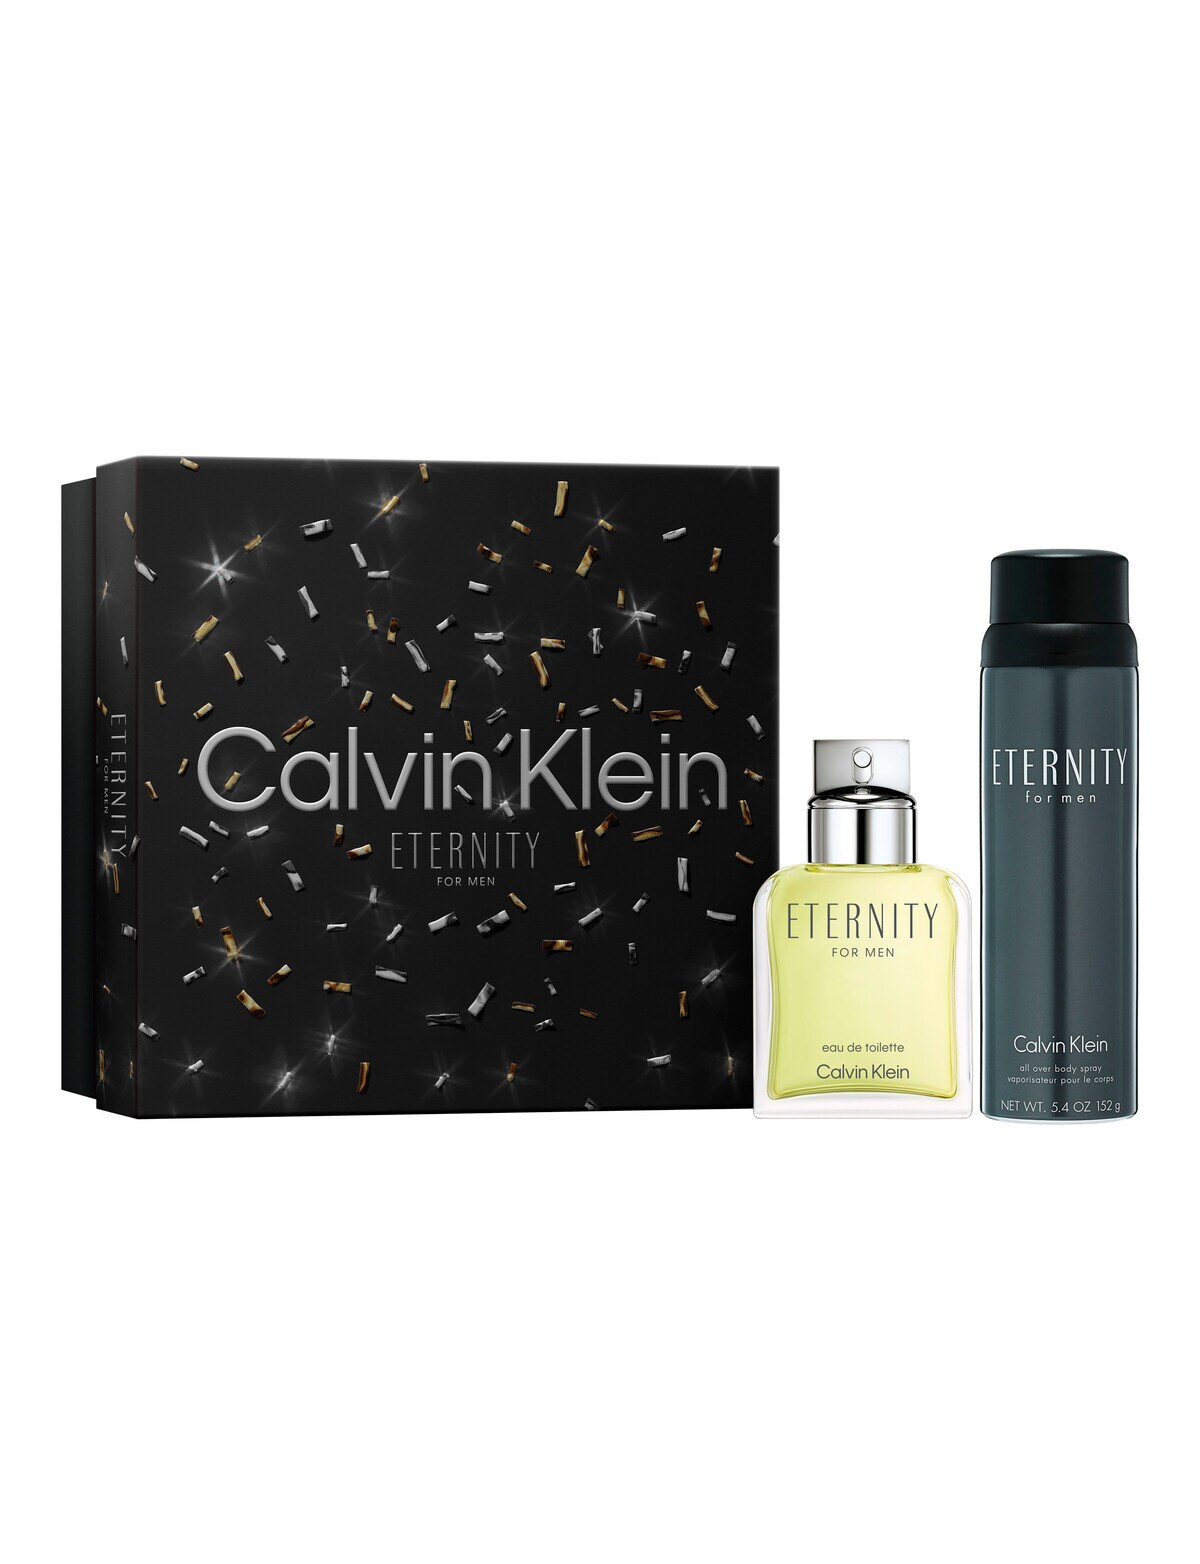 Calvin Klein Eternity For Men EDT 100ml 2-Piece Gift Set - Gift Sets